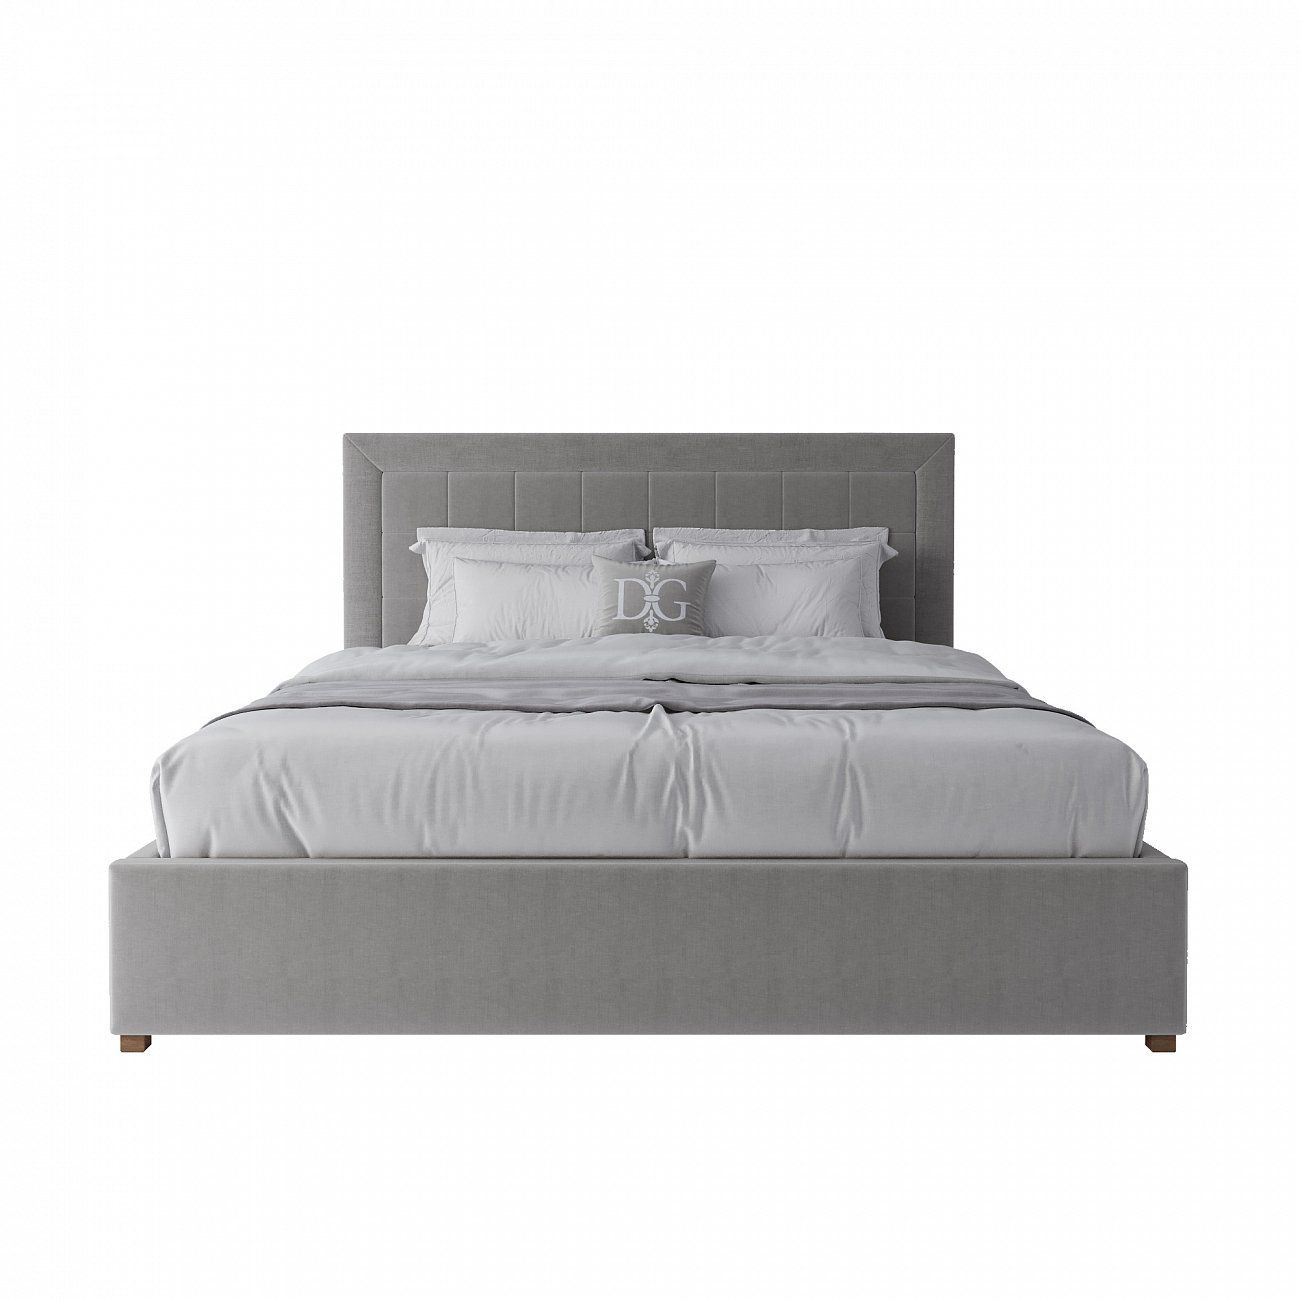 Double bed 180x200 cm beige Elizabeth